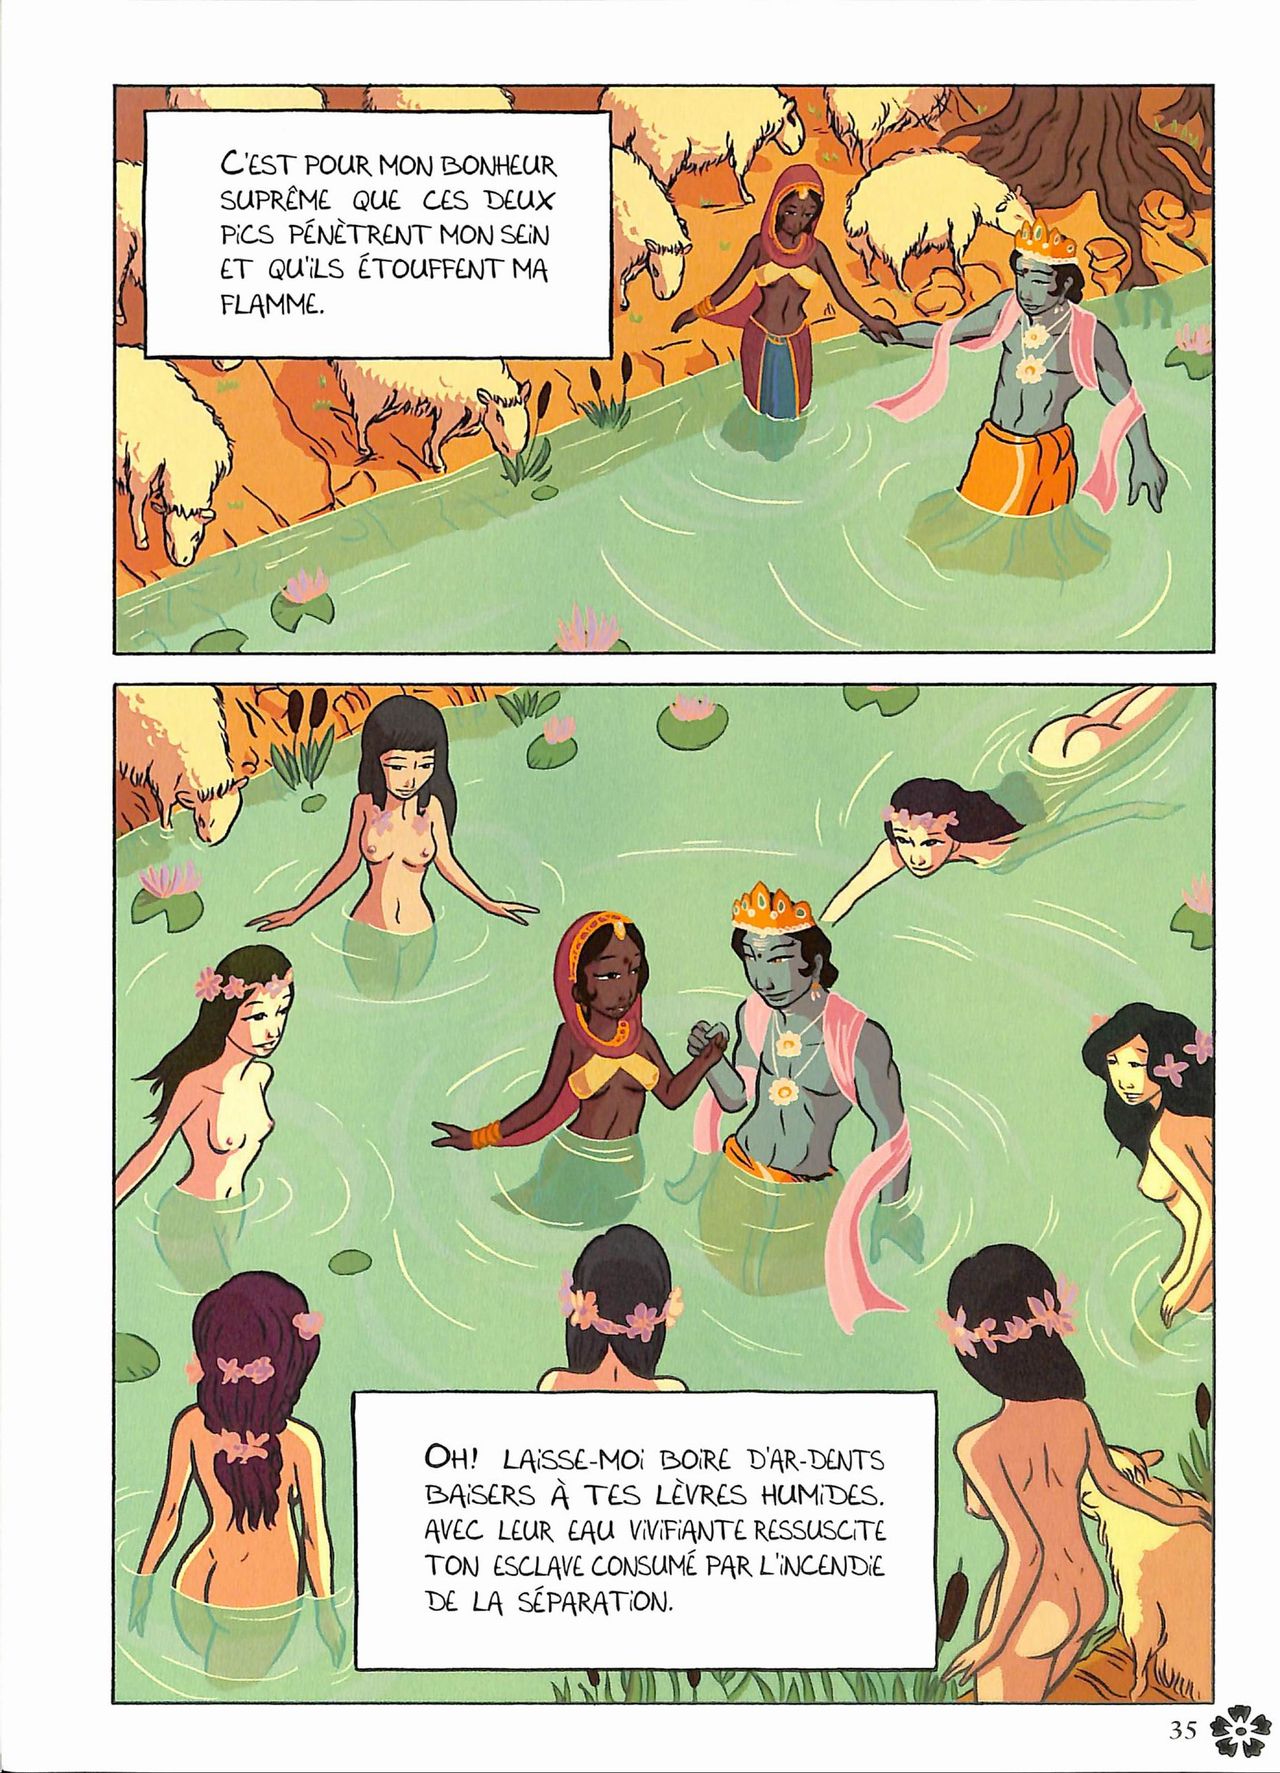 Kama Sutra en bandes dessinées - Kama Sutra with Comics numero d'image 36